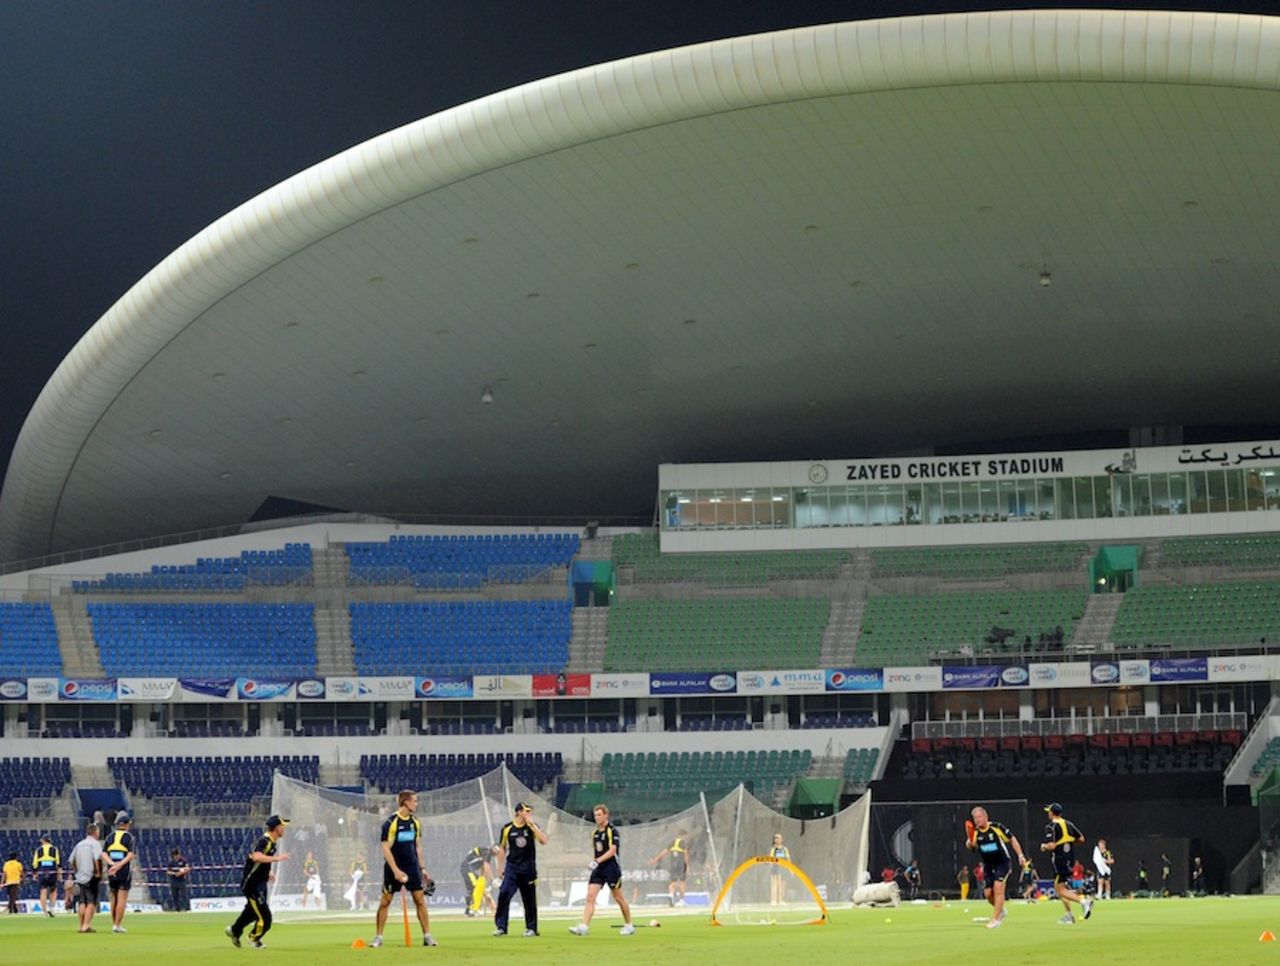 Australia team practices under lights in Abu Dhabi, Abu Dhabi, August 30, 2012